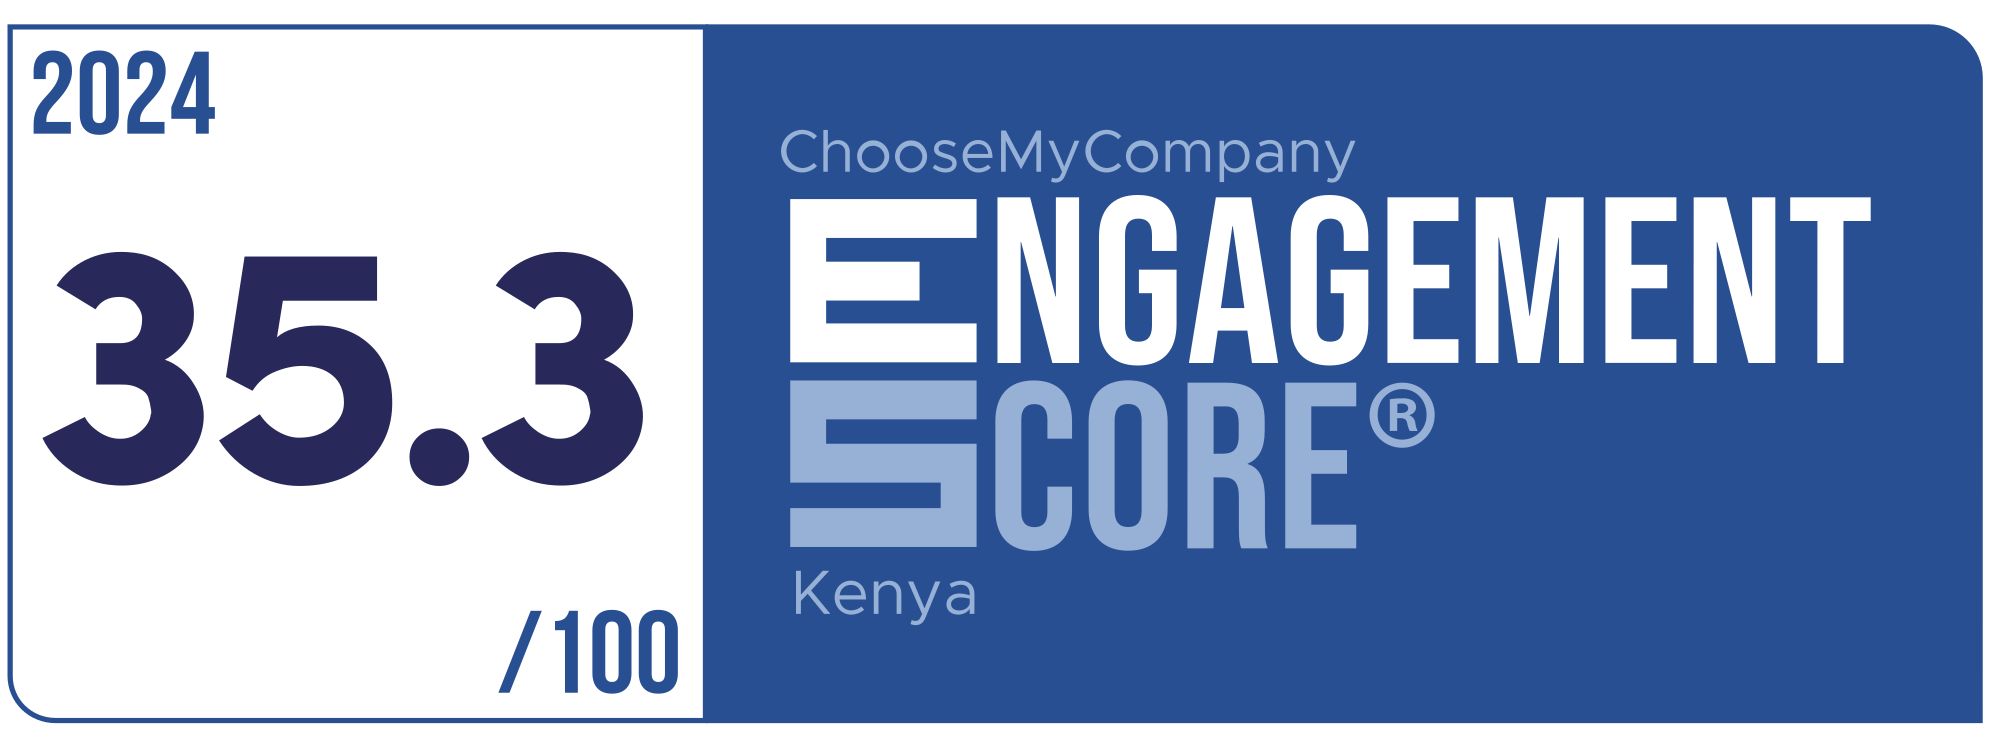 Label Engagement Score 2024 Kenya